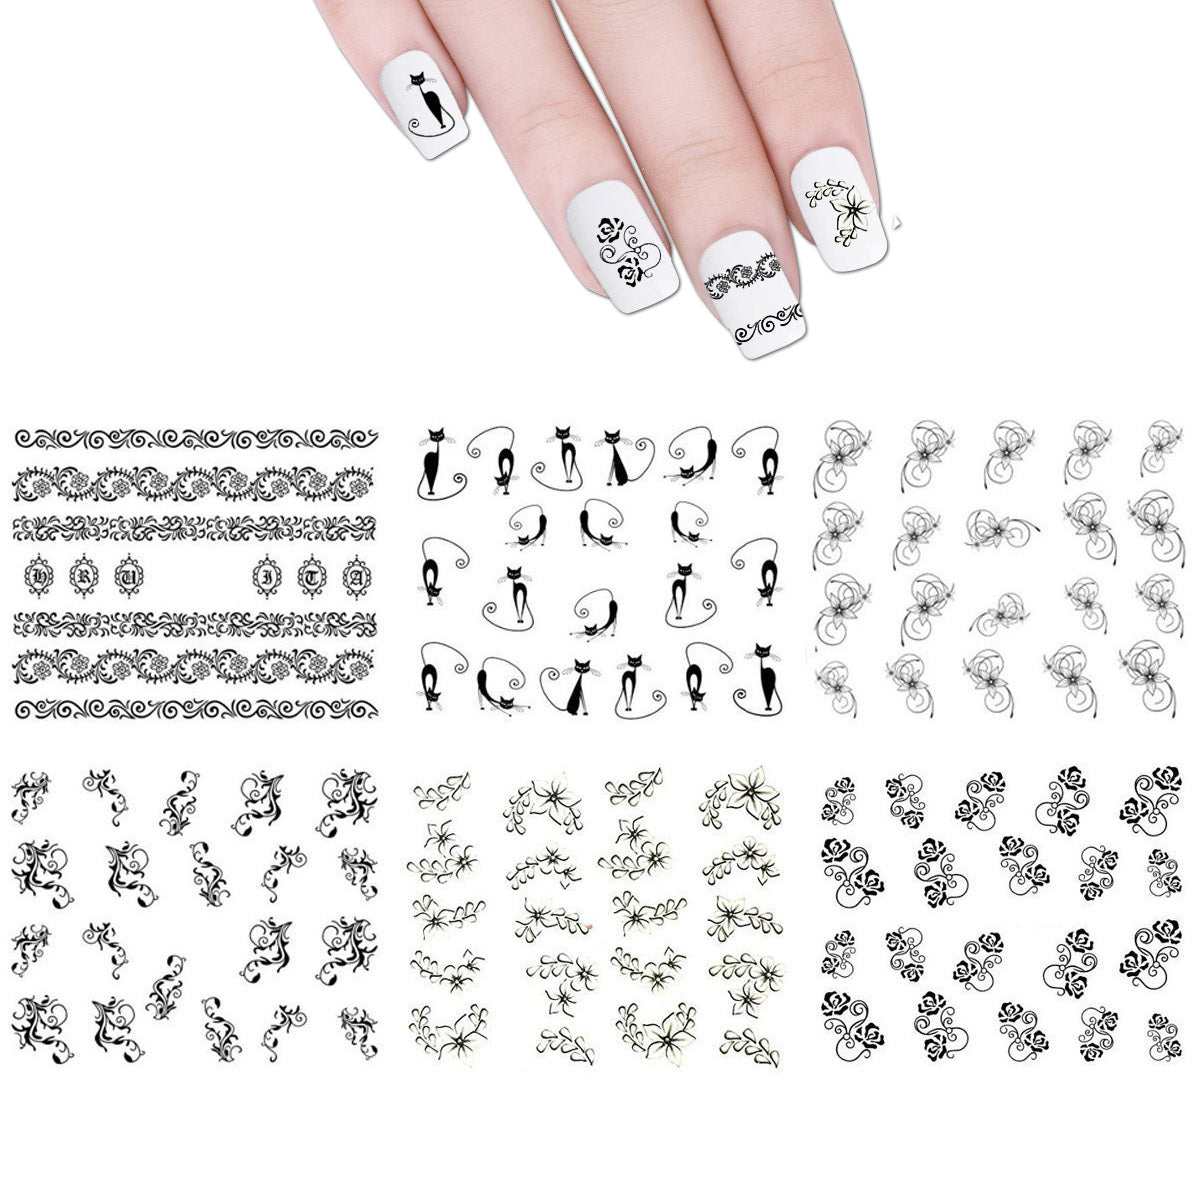 Wrapables Nail Art Water Nail Stickers Water Transfer Stickers / Nail Art Tattoos / Nail Art Decals, Black & White (6 sheets)